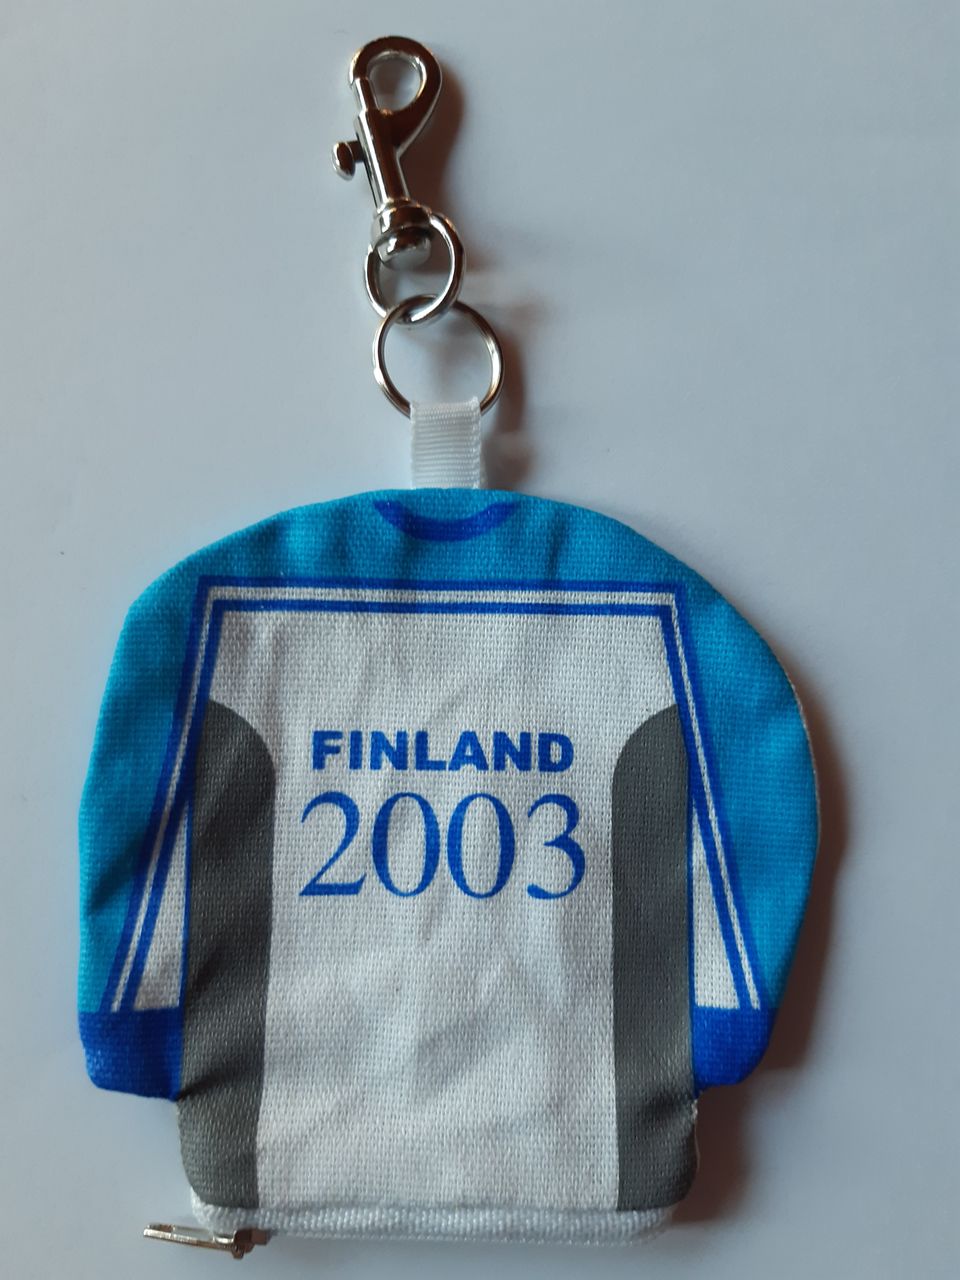 FINLAND 2003 laukkukoriste,pussi